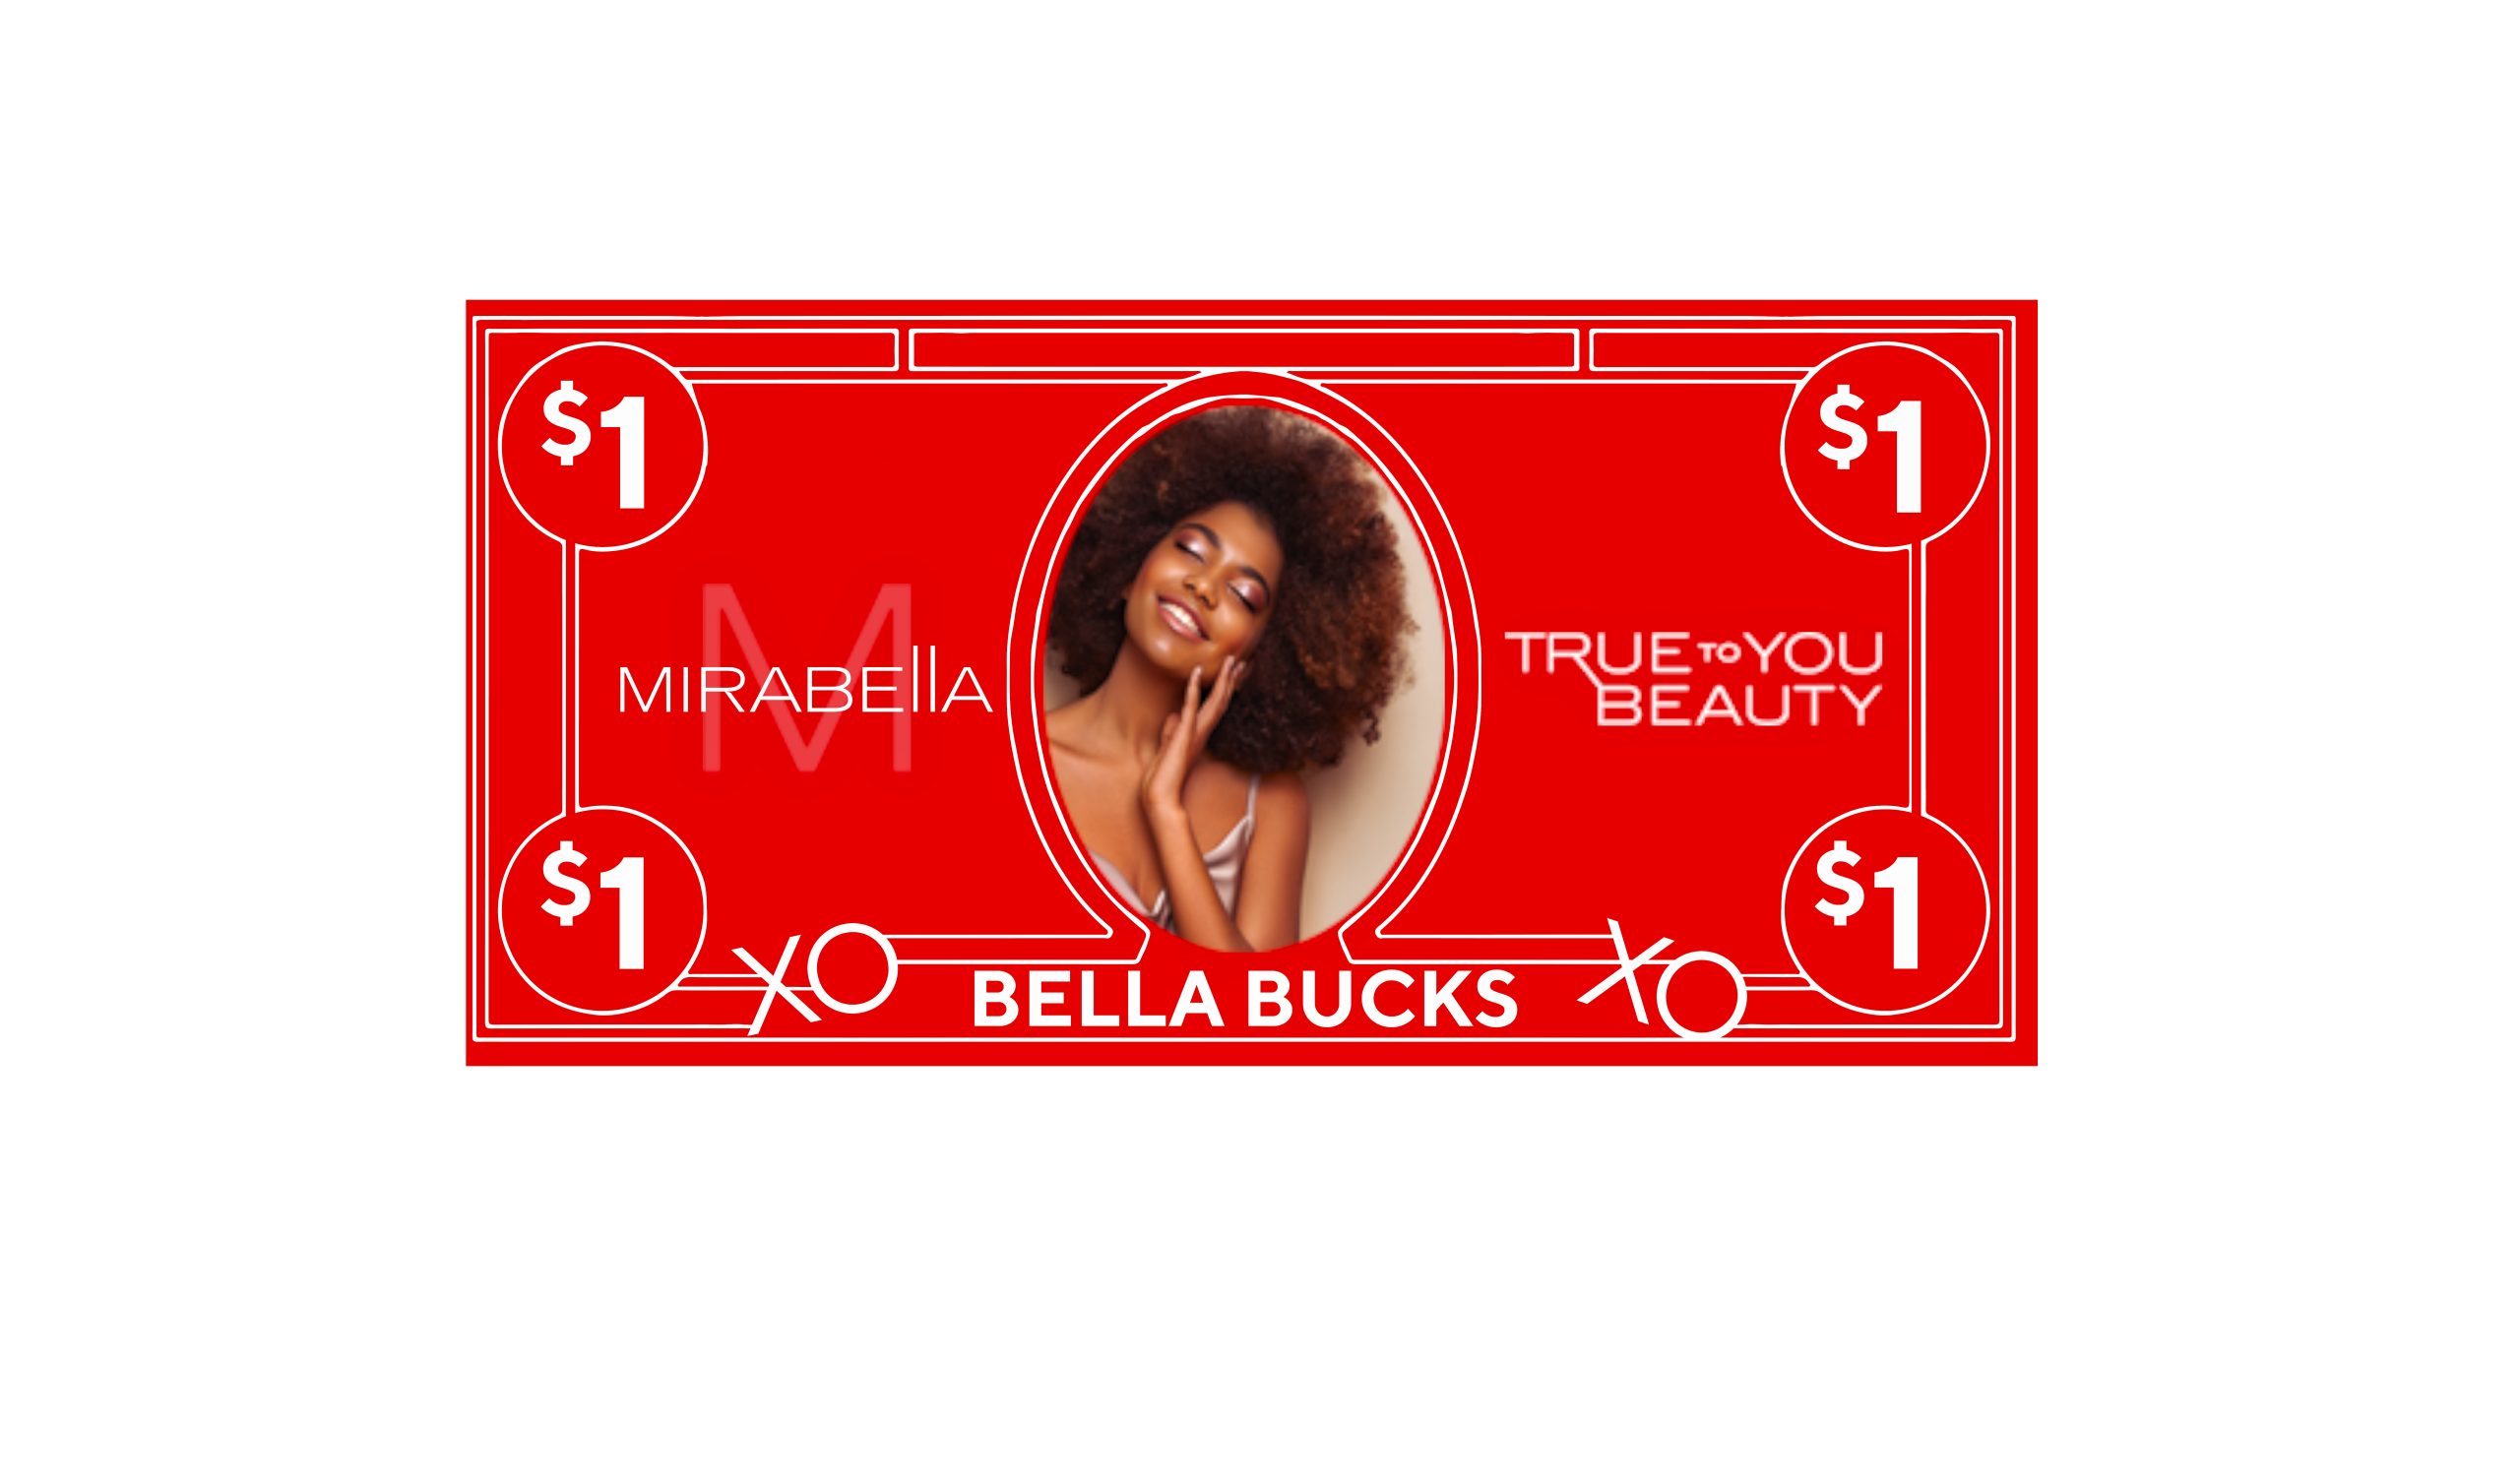 $1 Bella Buck